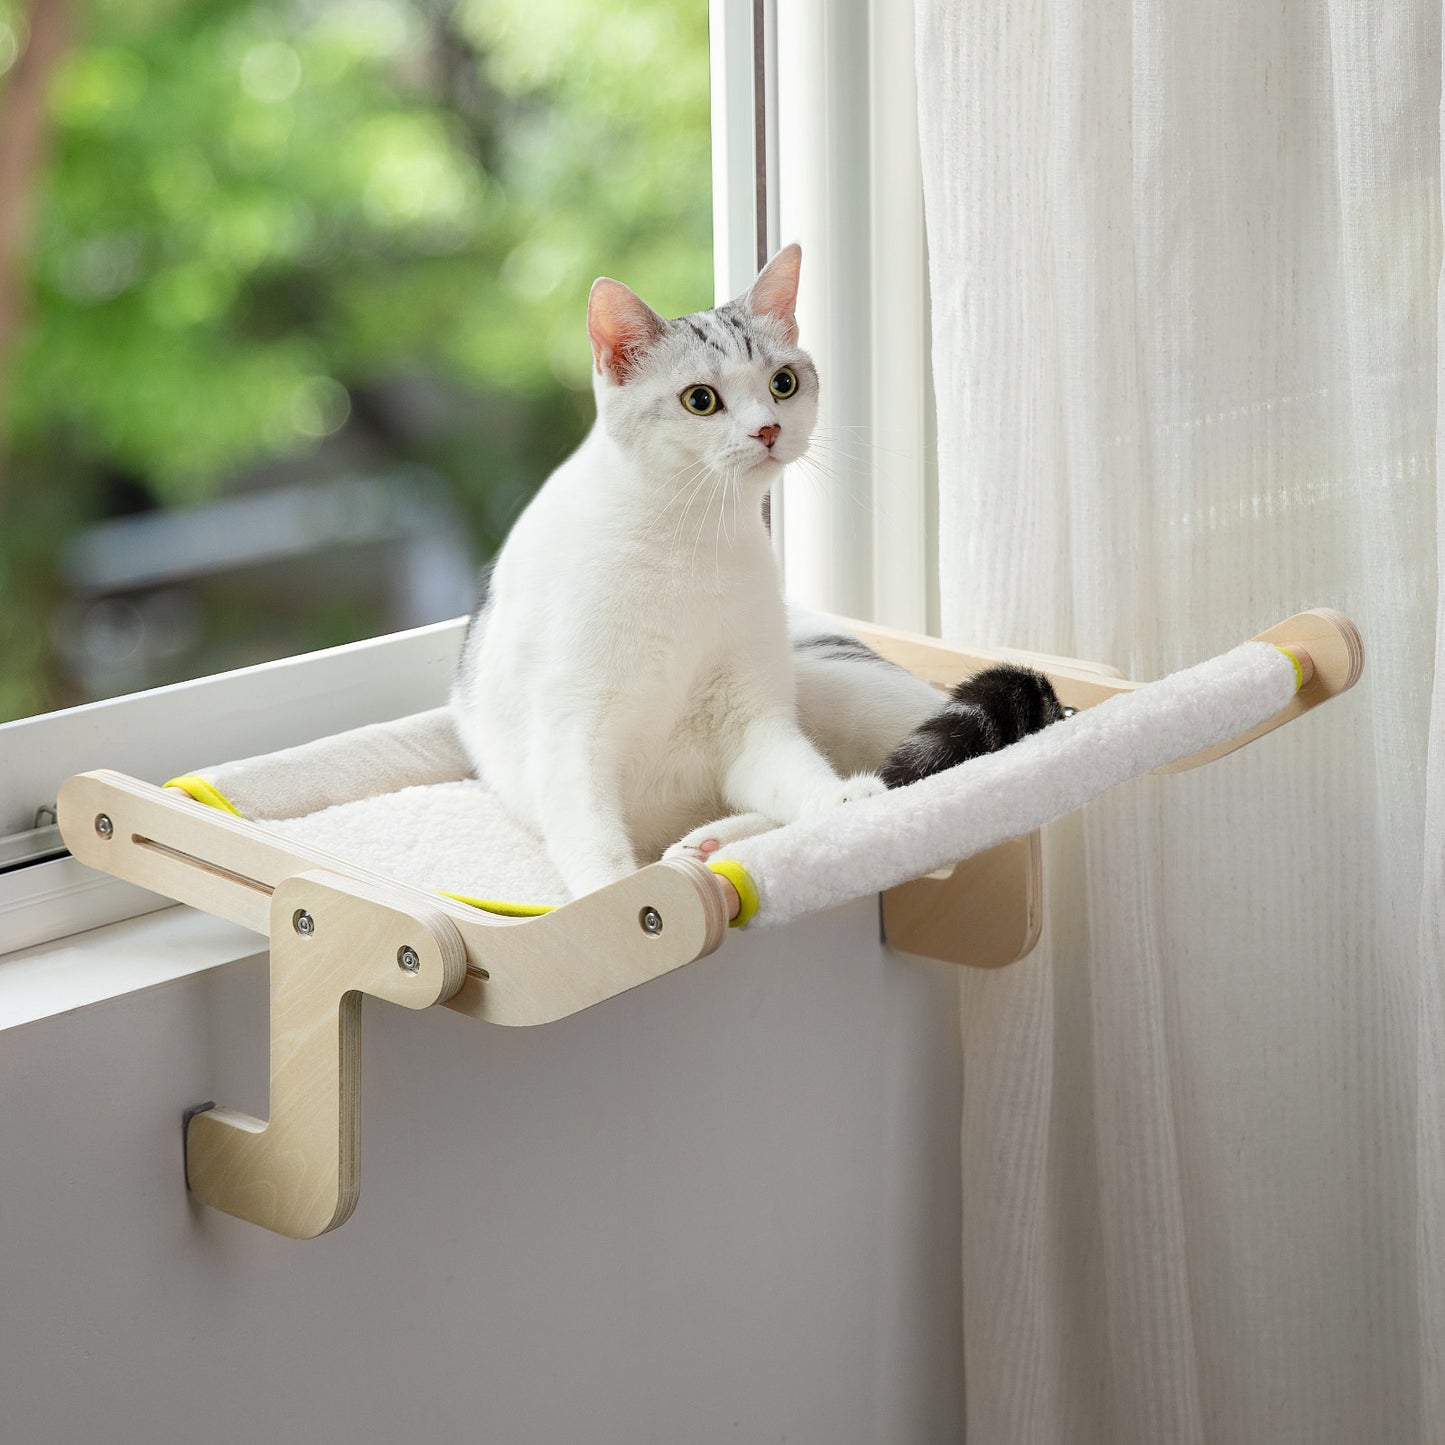 Sturdy Window-mounted cat perch - No drill Cat hammock - No drill cat perch - Free Shipping 